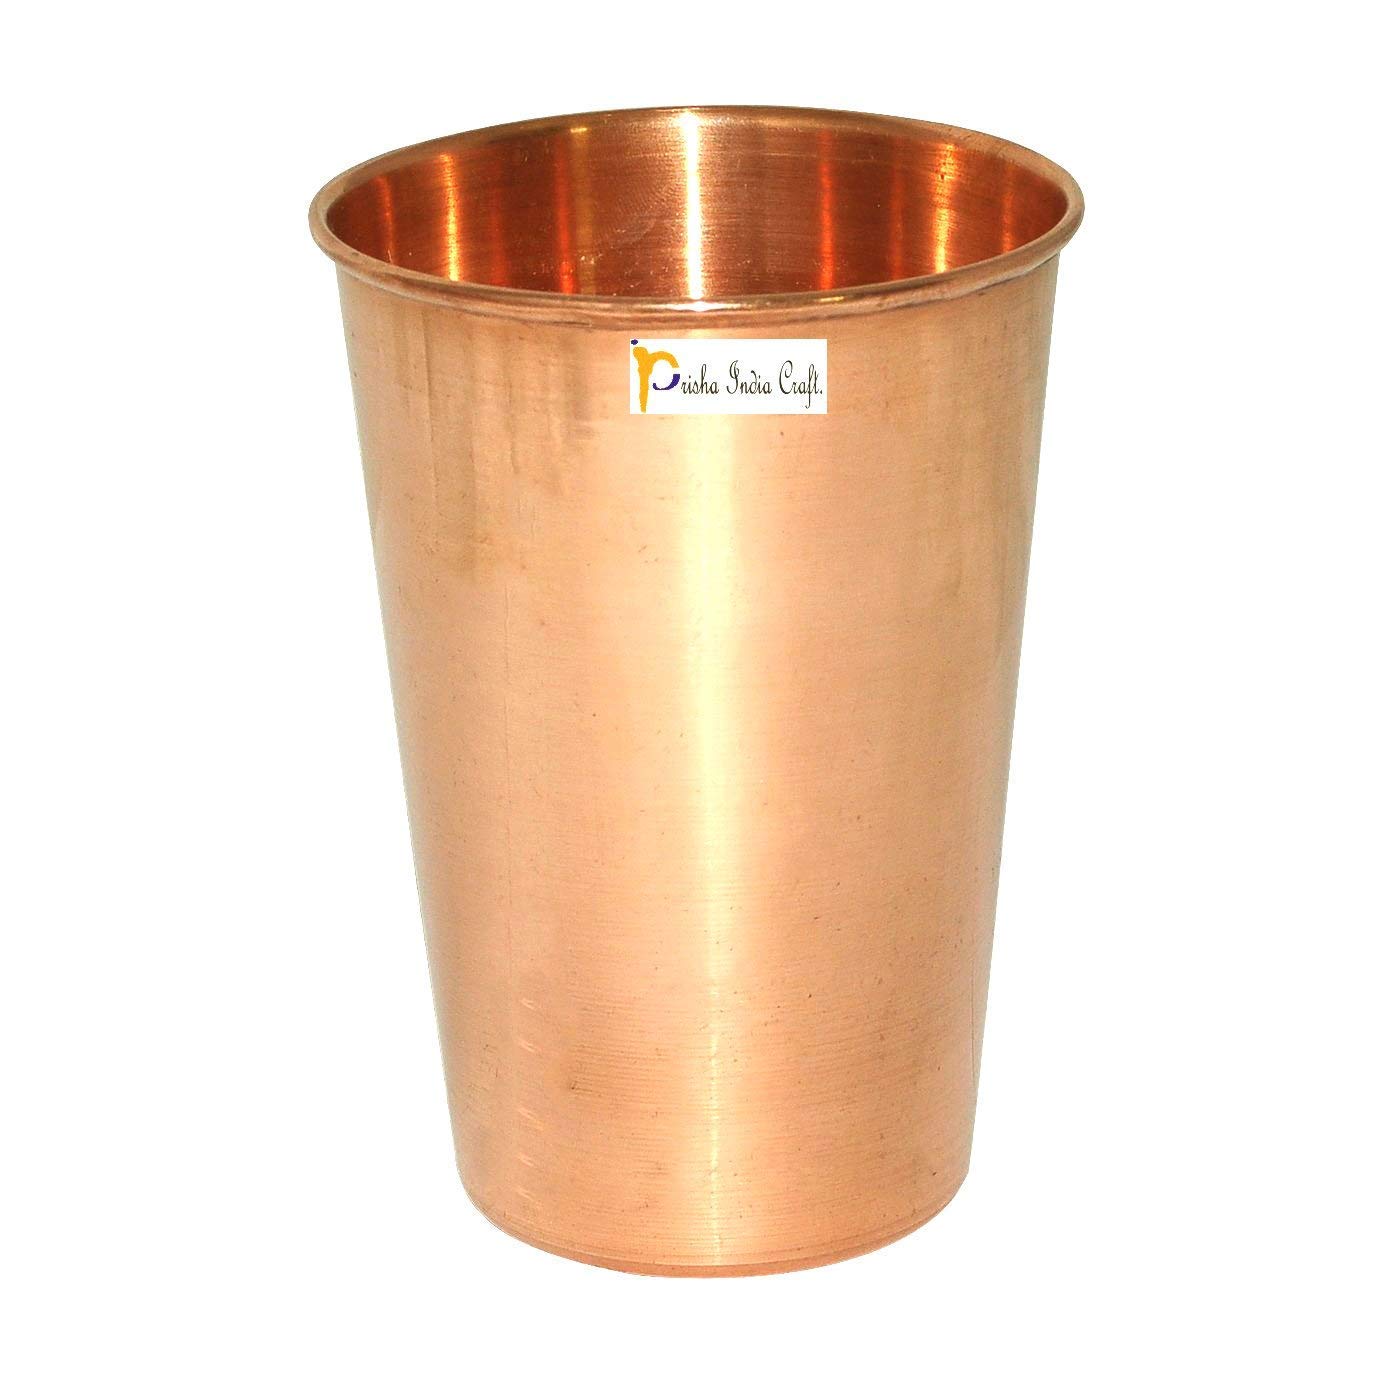 Prisha India Craft Copper Water Glass Tumbler, 450 ML